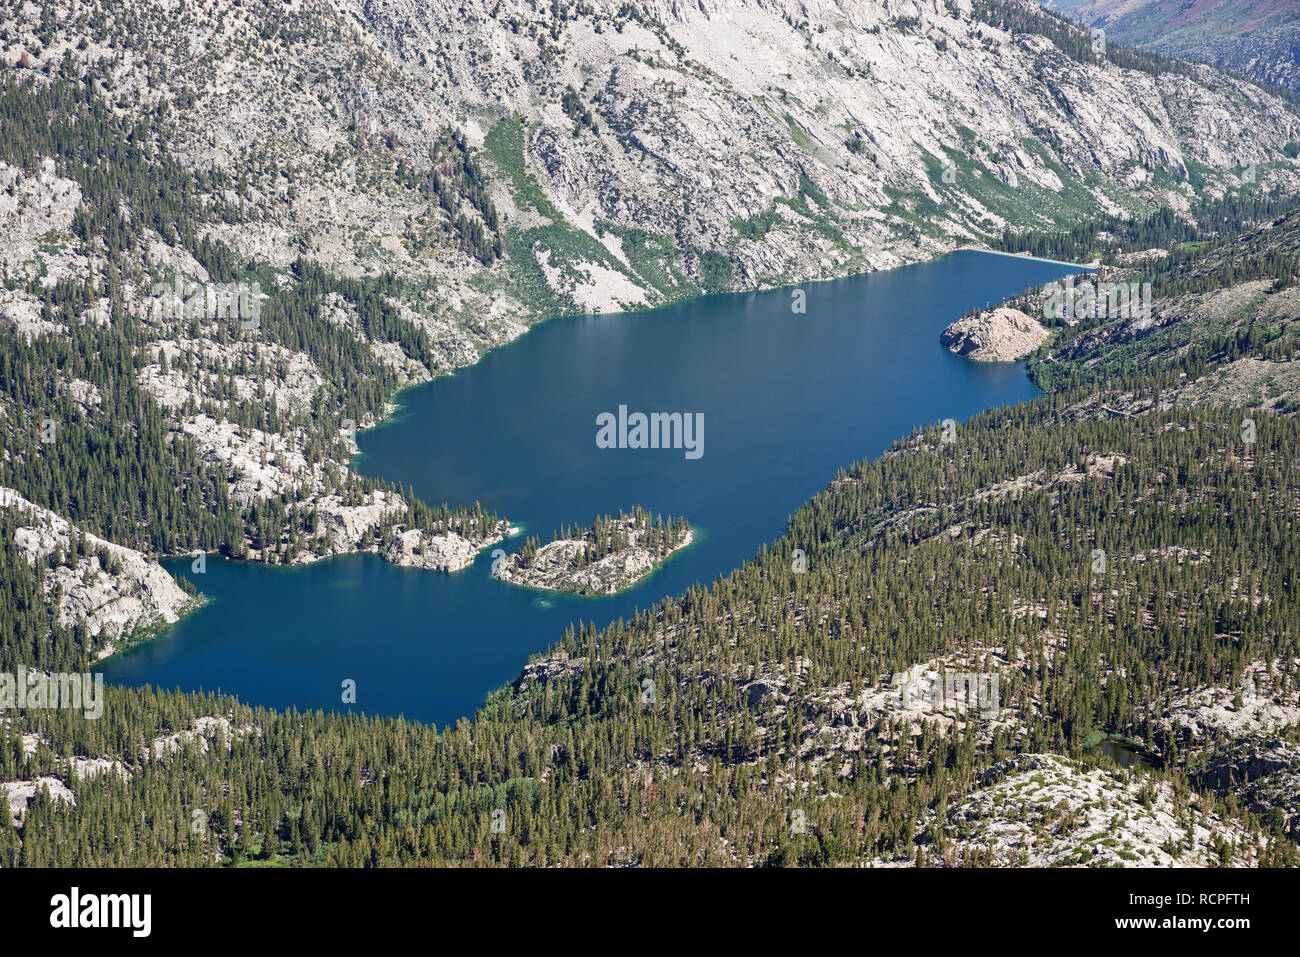 Vista aérea que muestra un completo del depósito de agua del lago del sur de California Foto de stock